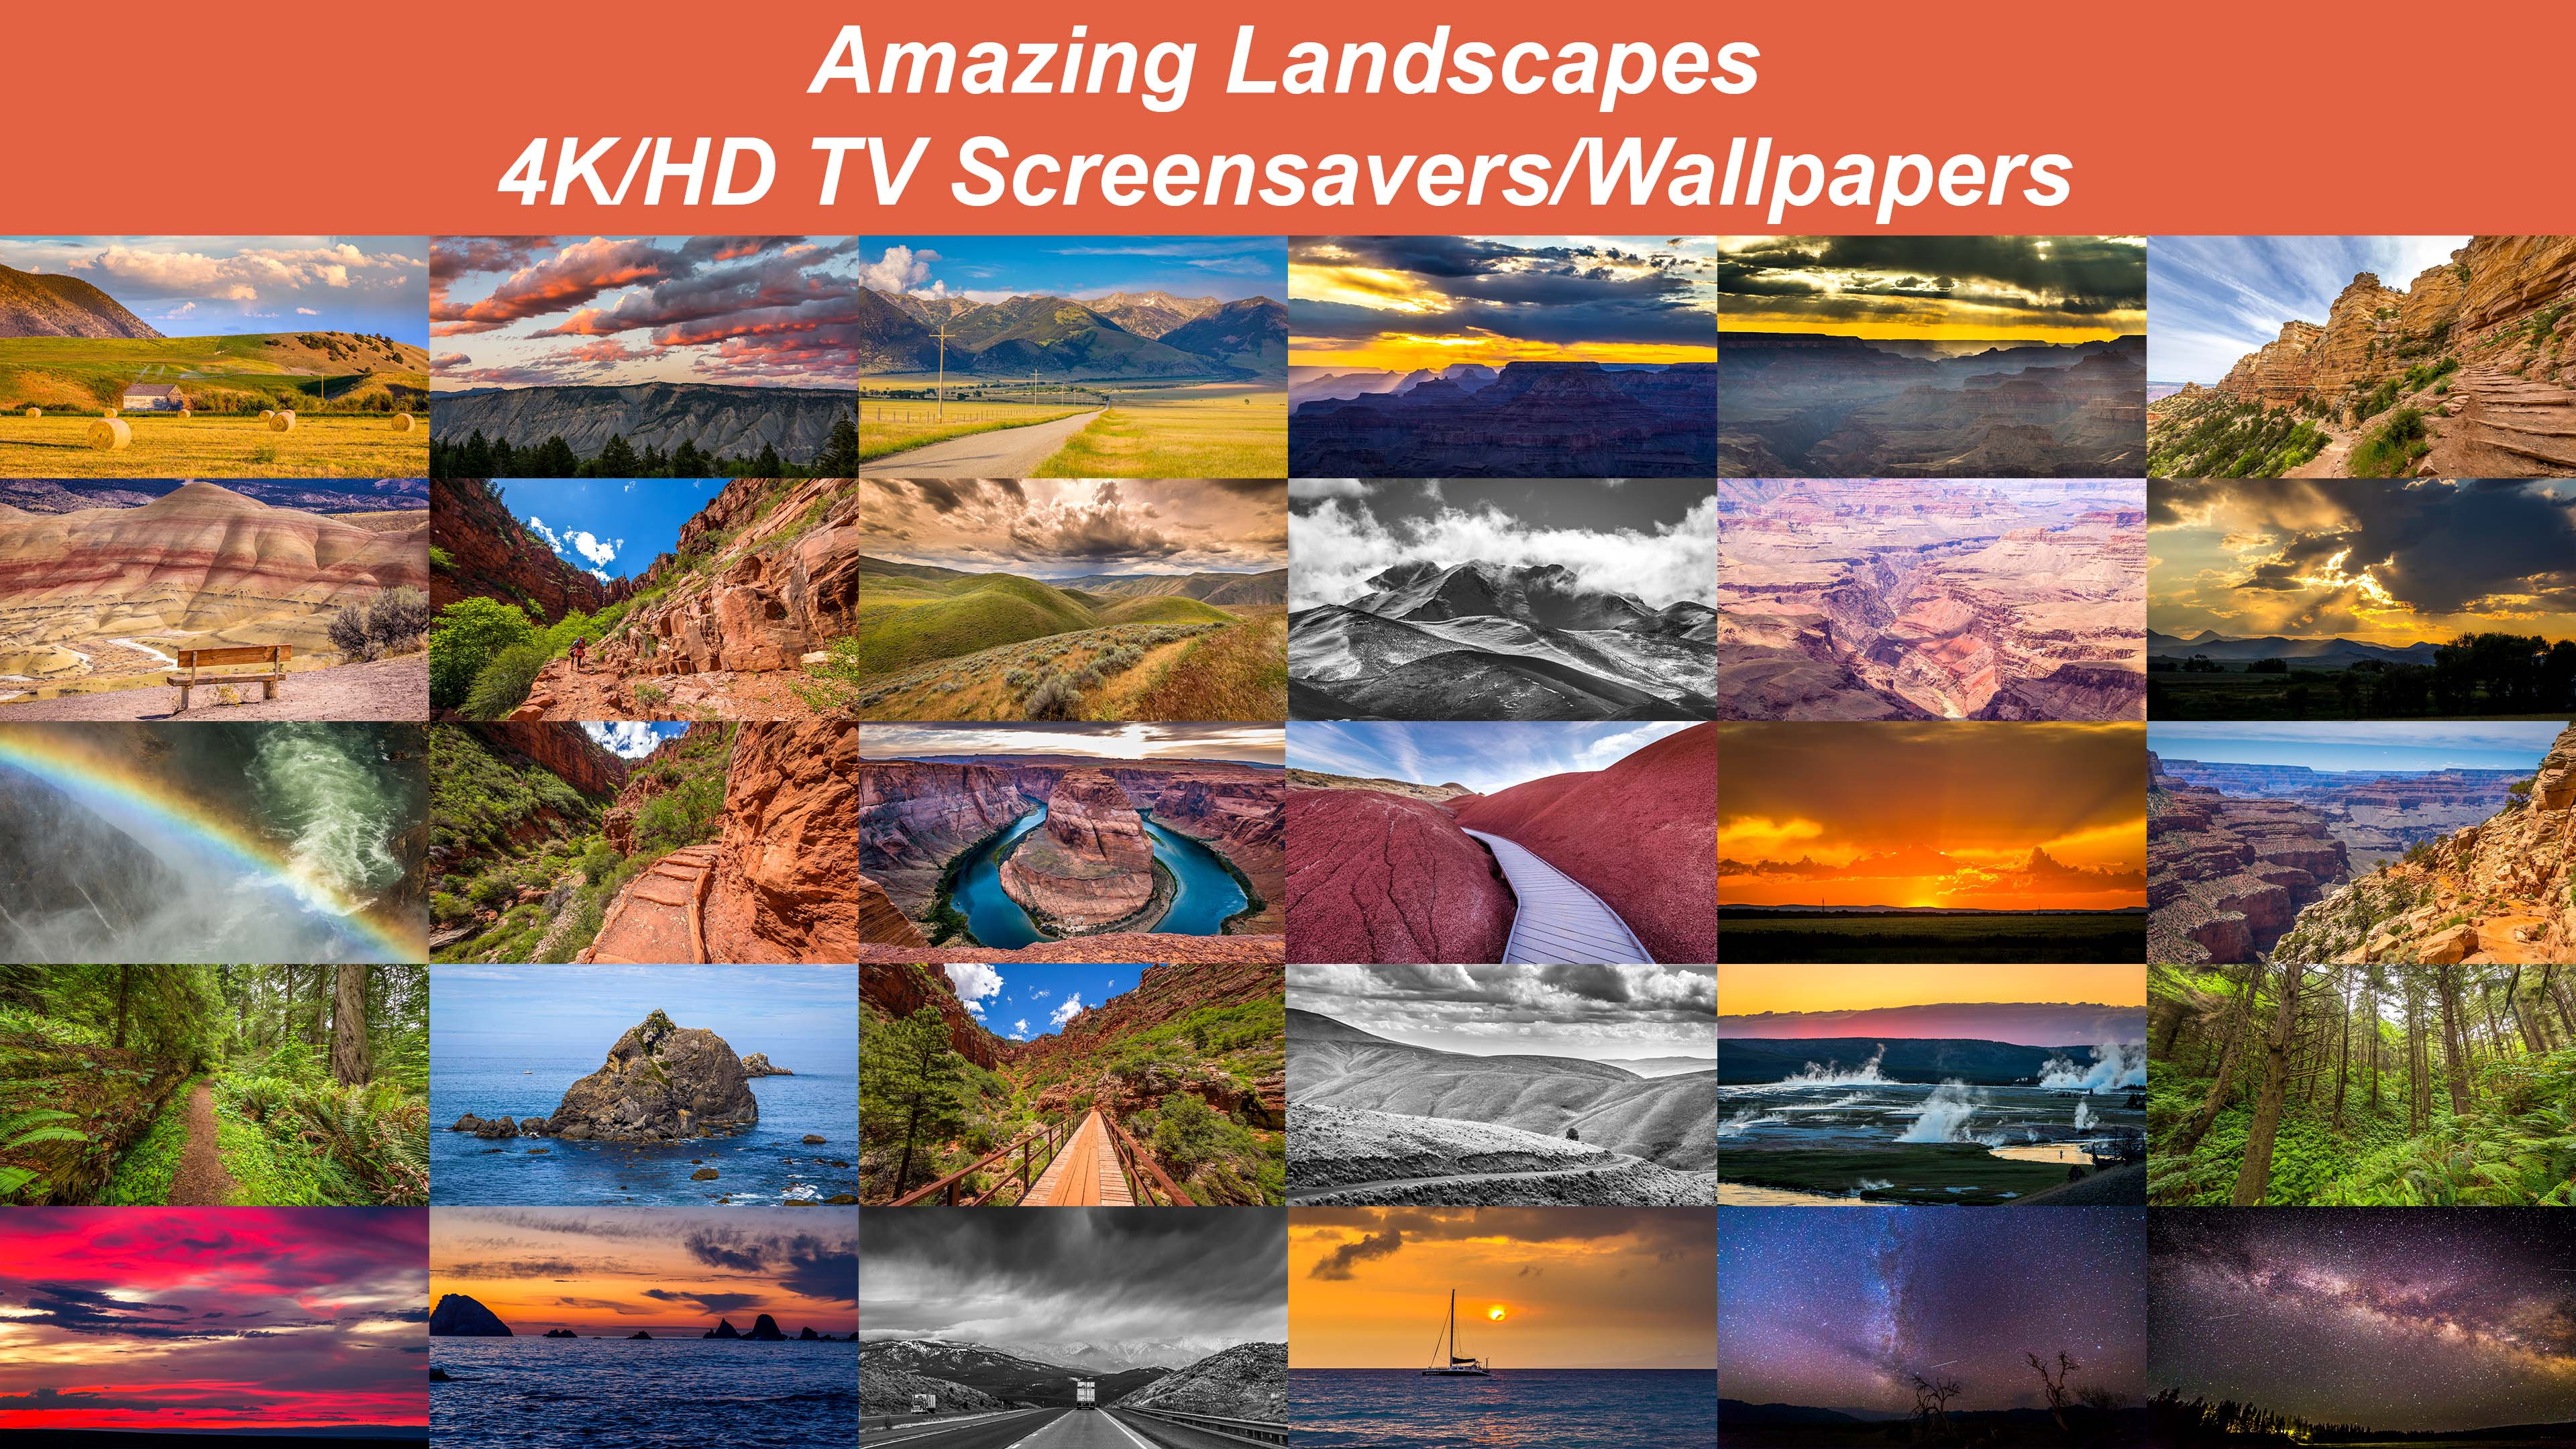 Amazing landscapes 4k